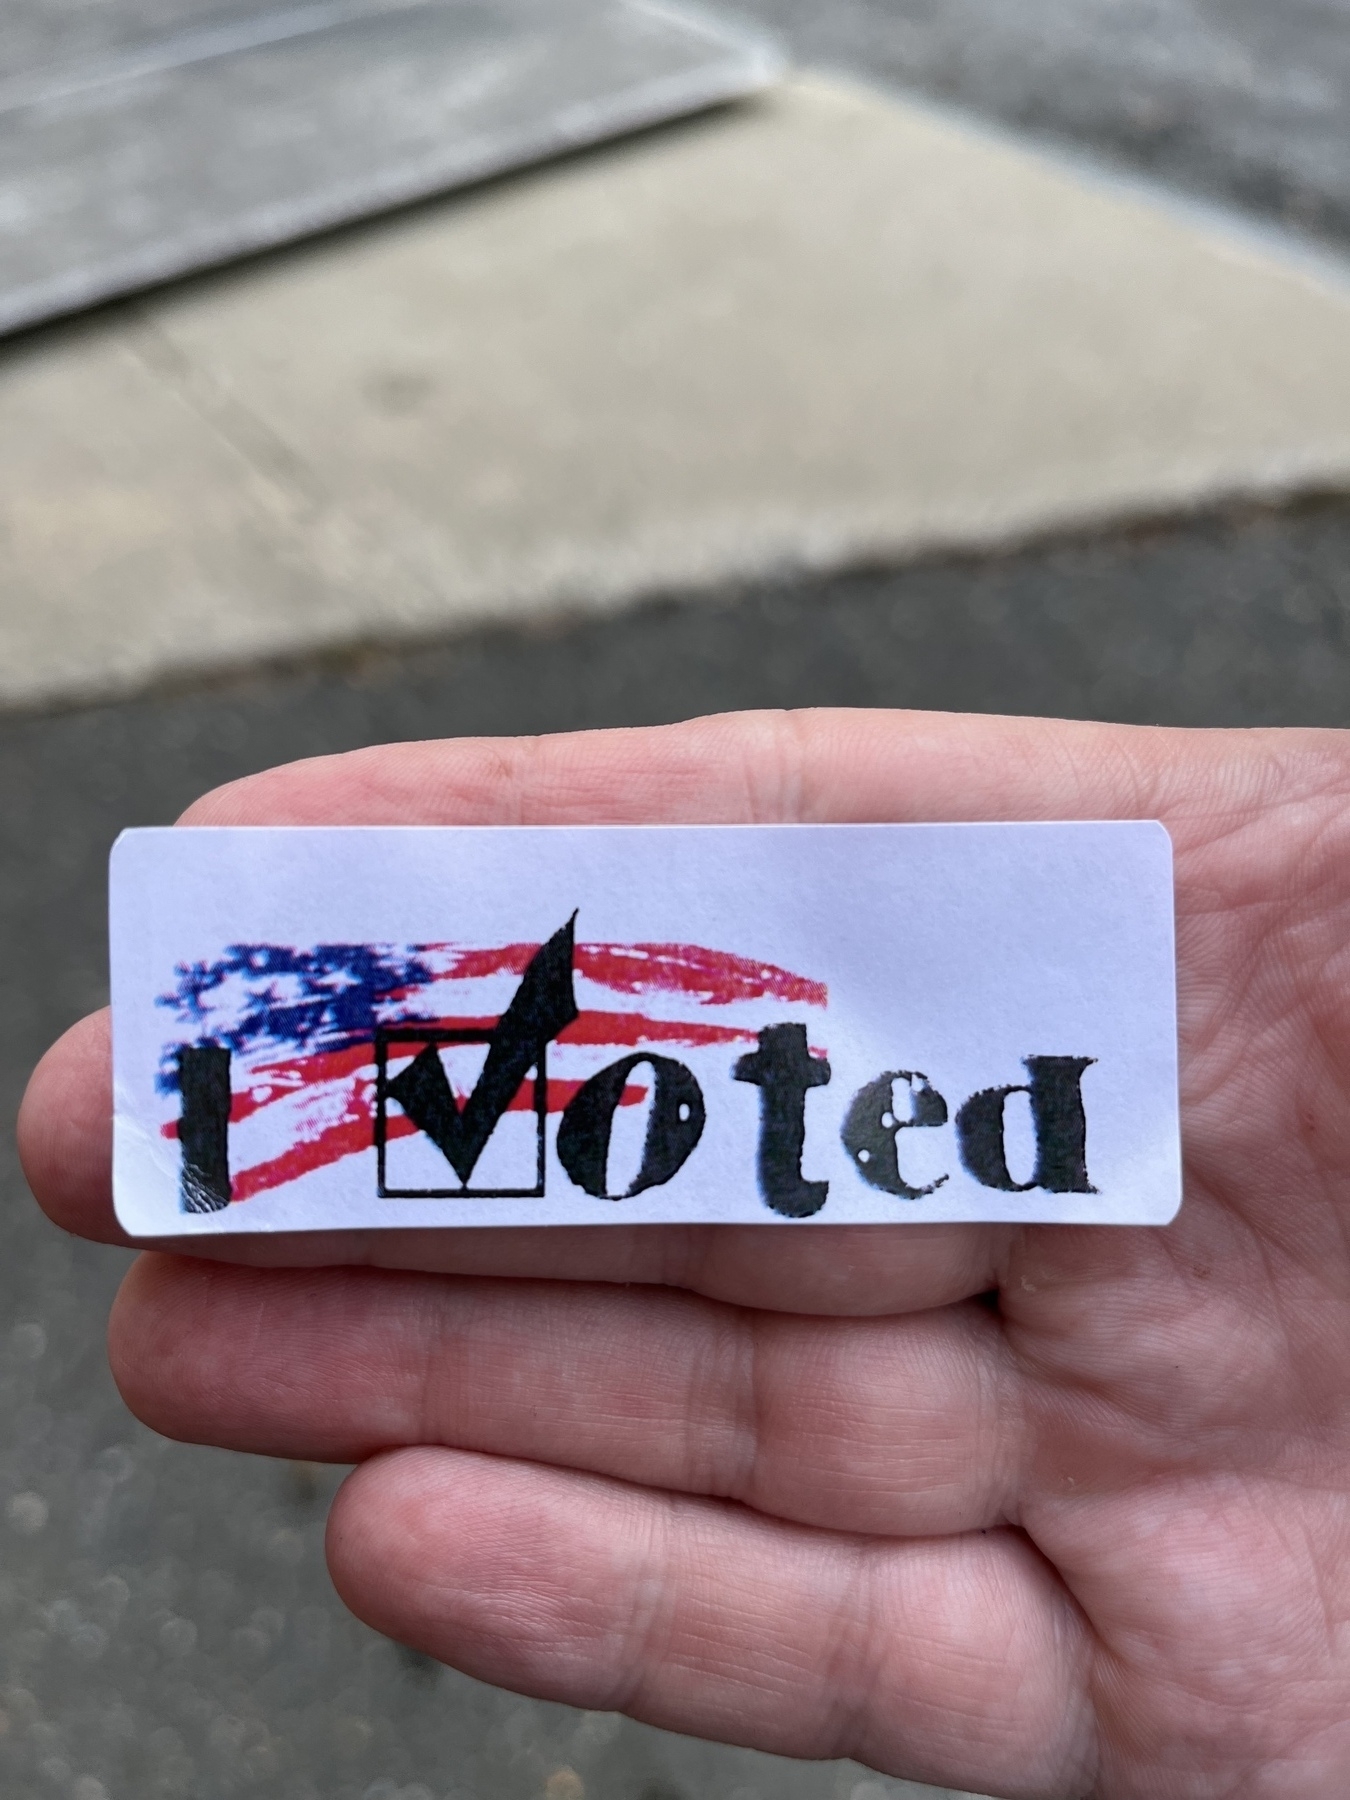 “I Voted” sticker.